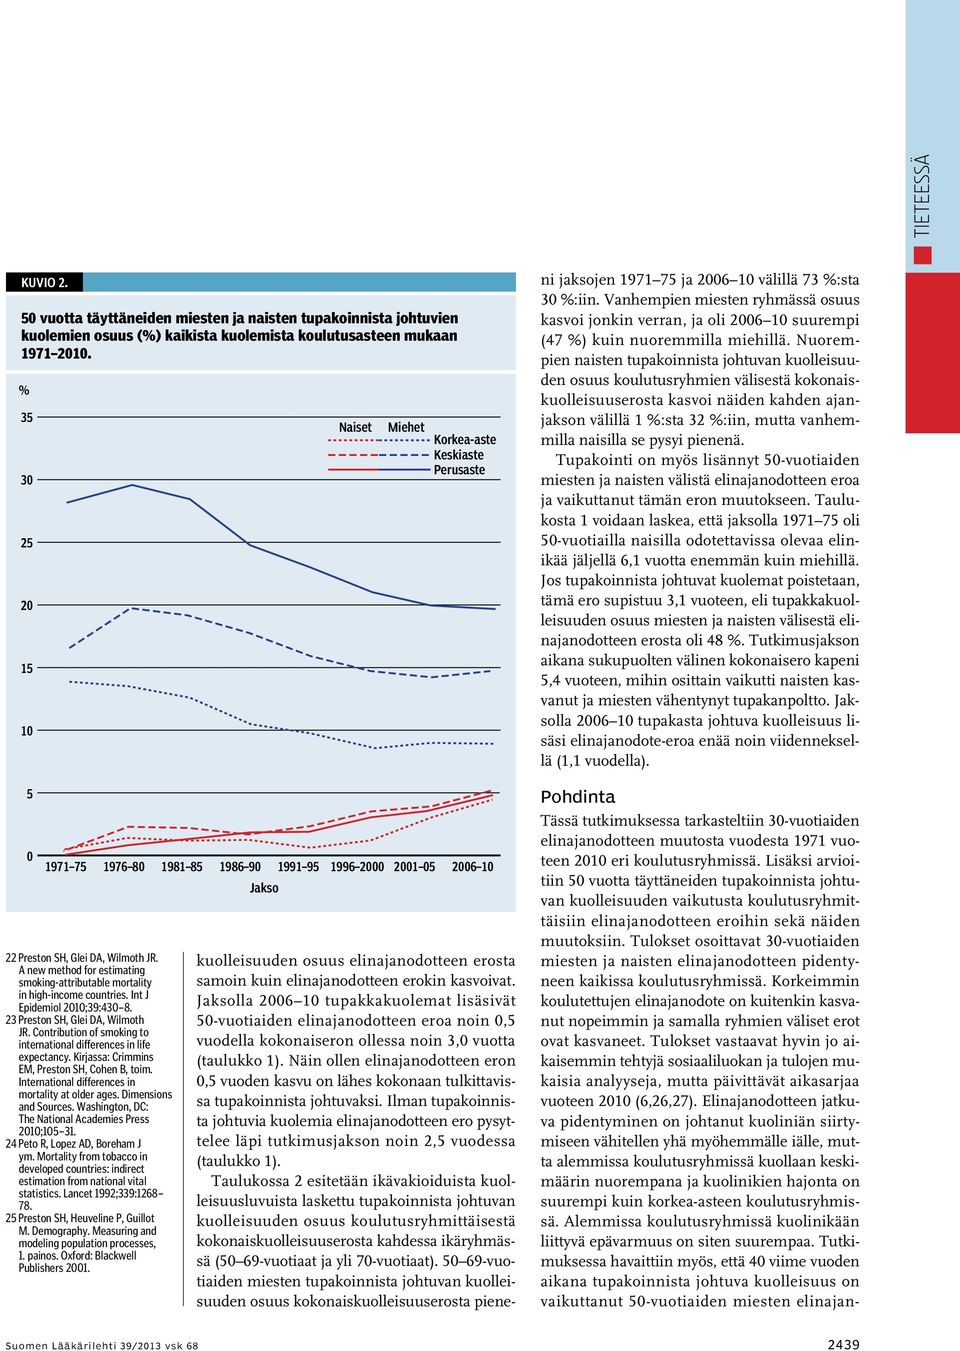 A new method for estimating smoking-attributable mortality in high-income countries. Int J Epidemiol 200;39:430 8. 23 Preston SH, Glei DA, Wilmoth JR.